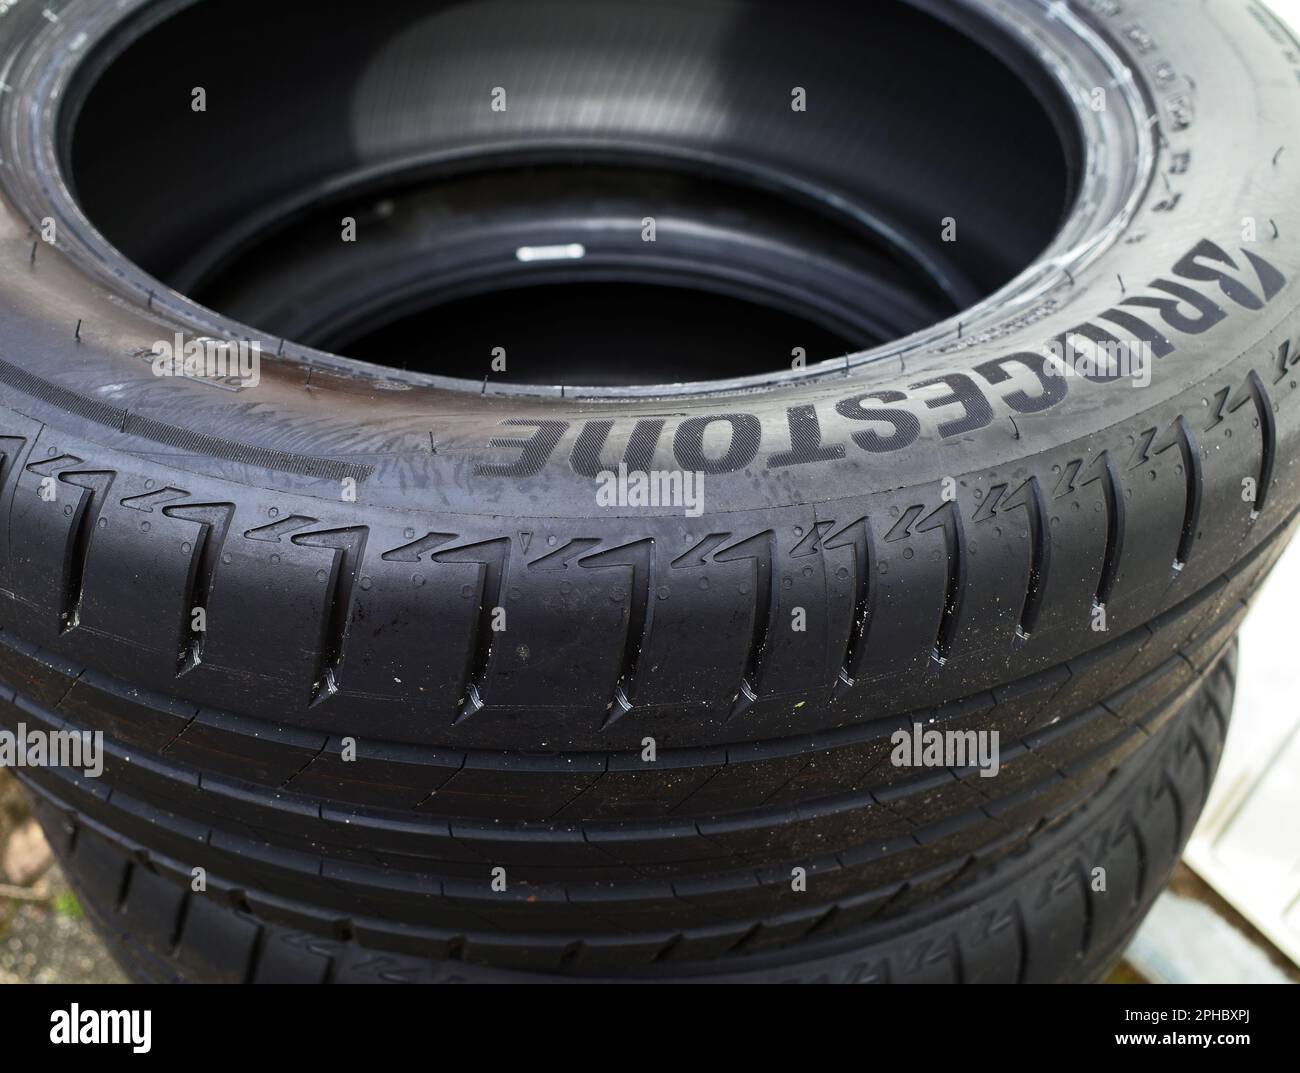 Bridgestone tires -Fotos und -Bildmaterial in hoher Auflösung – Alamy